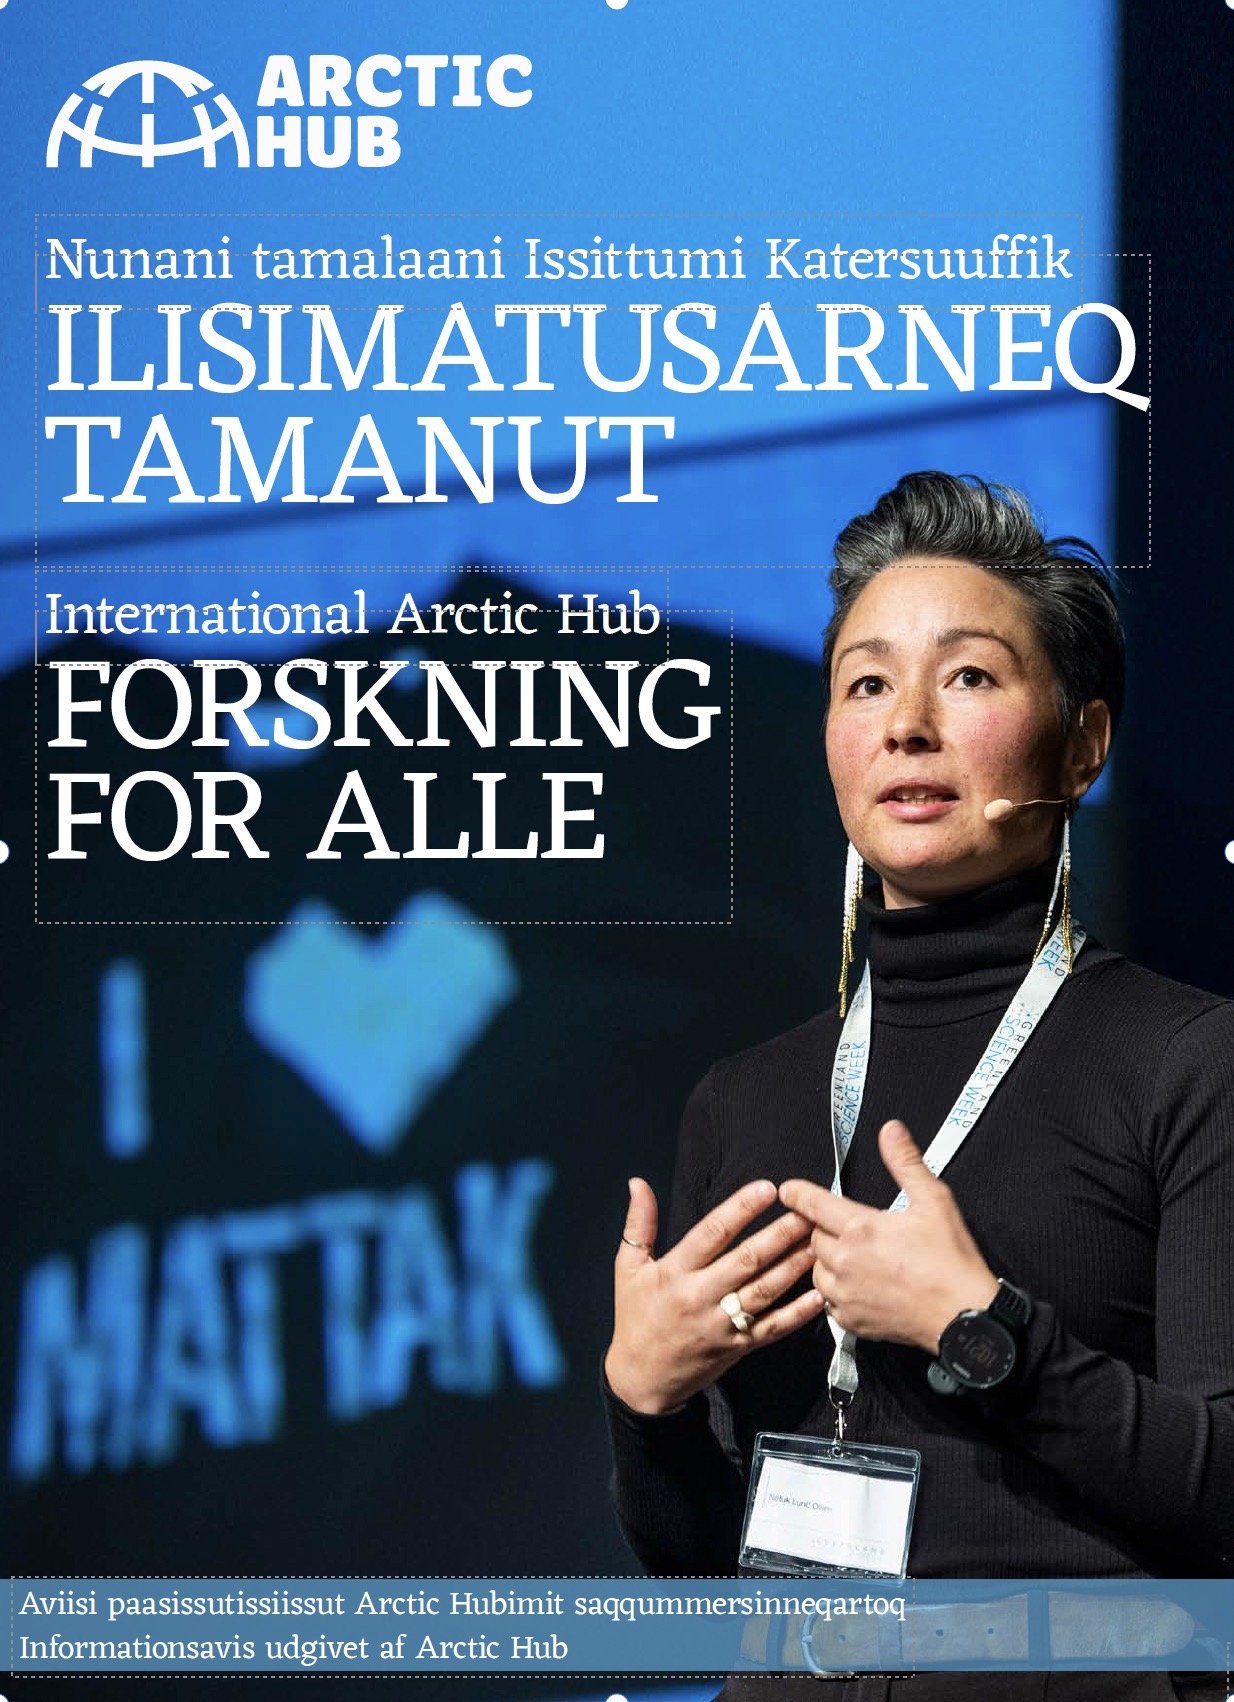 nirs-featured-in-arctic-hub-sermitsiaq-publication-narsaq